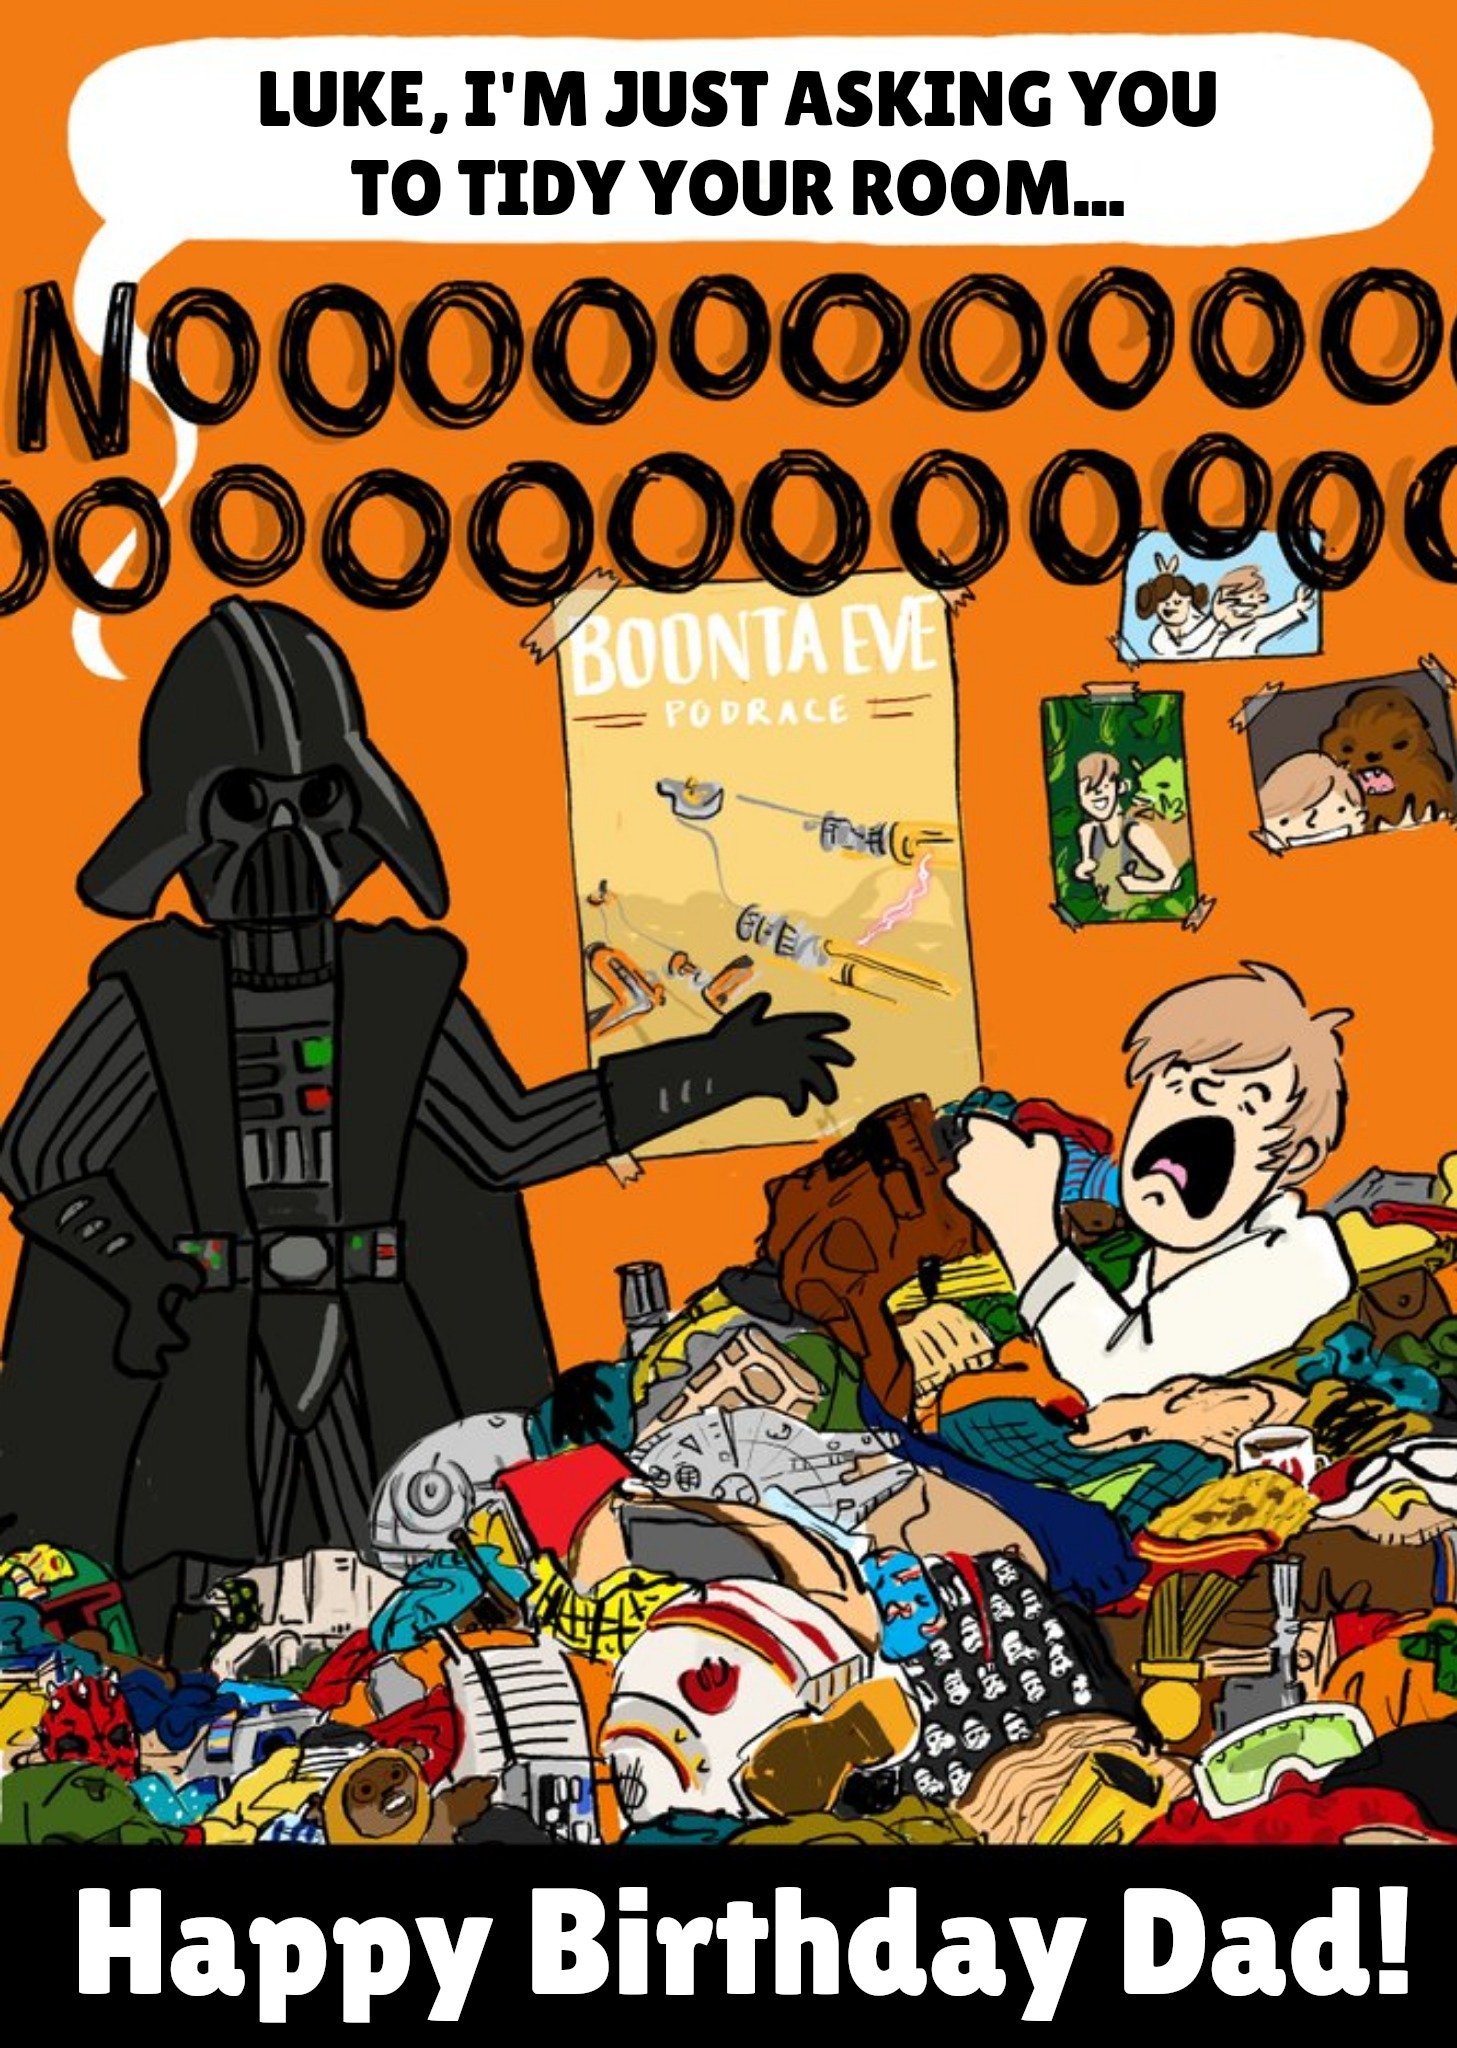 Disney Funny Star Wars Darth Vader Luke Skywalker Dad Birthday Card, Large